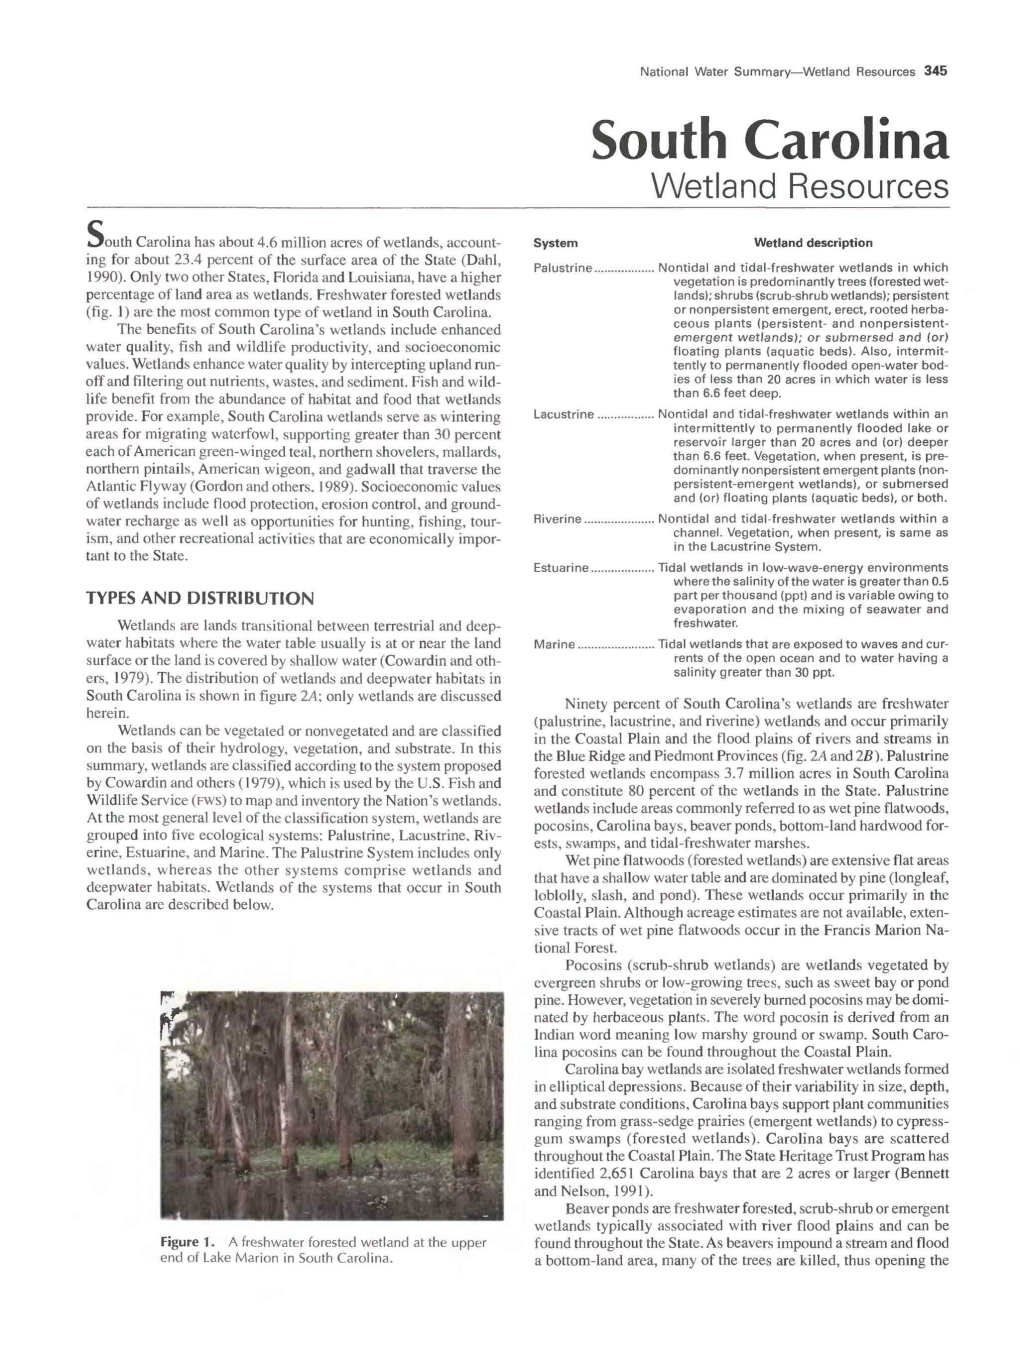 National Water Summary Wetland Resources: South Carolina